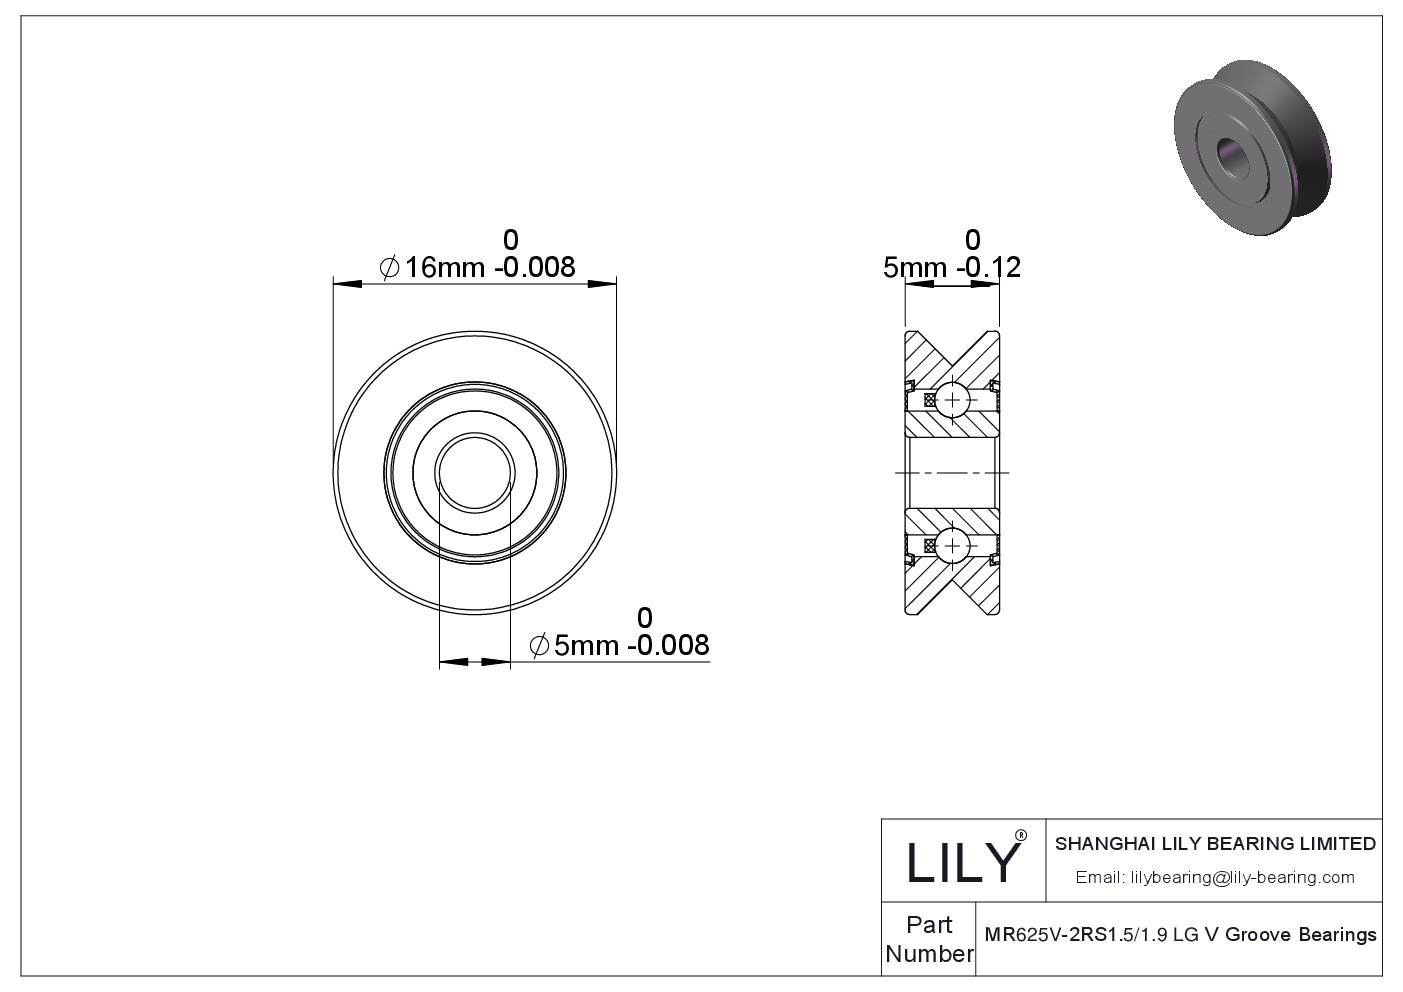 MR625V-2RS1.5/1.9 LG V Groove Bearings cad drawing